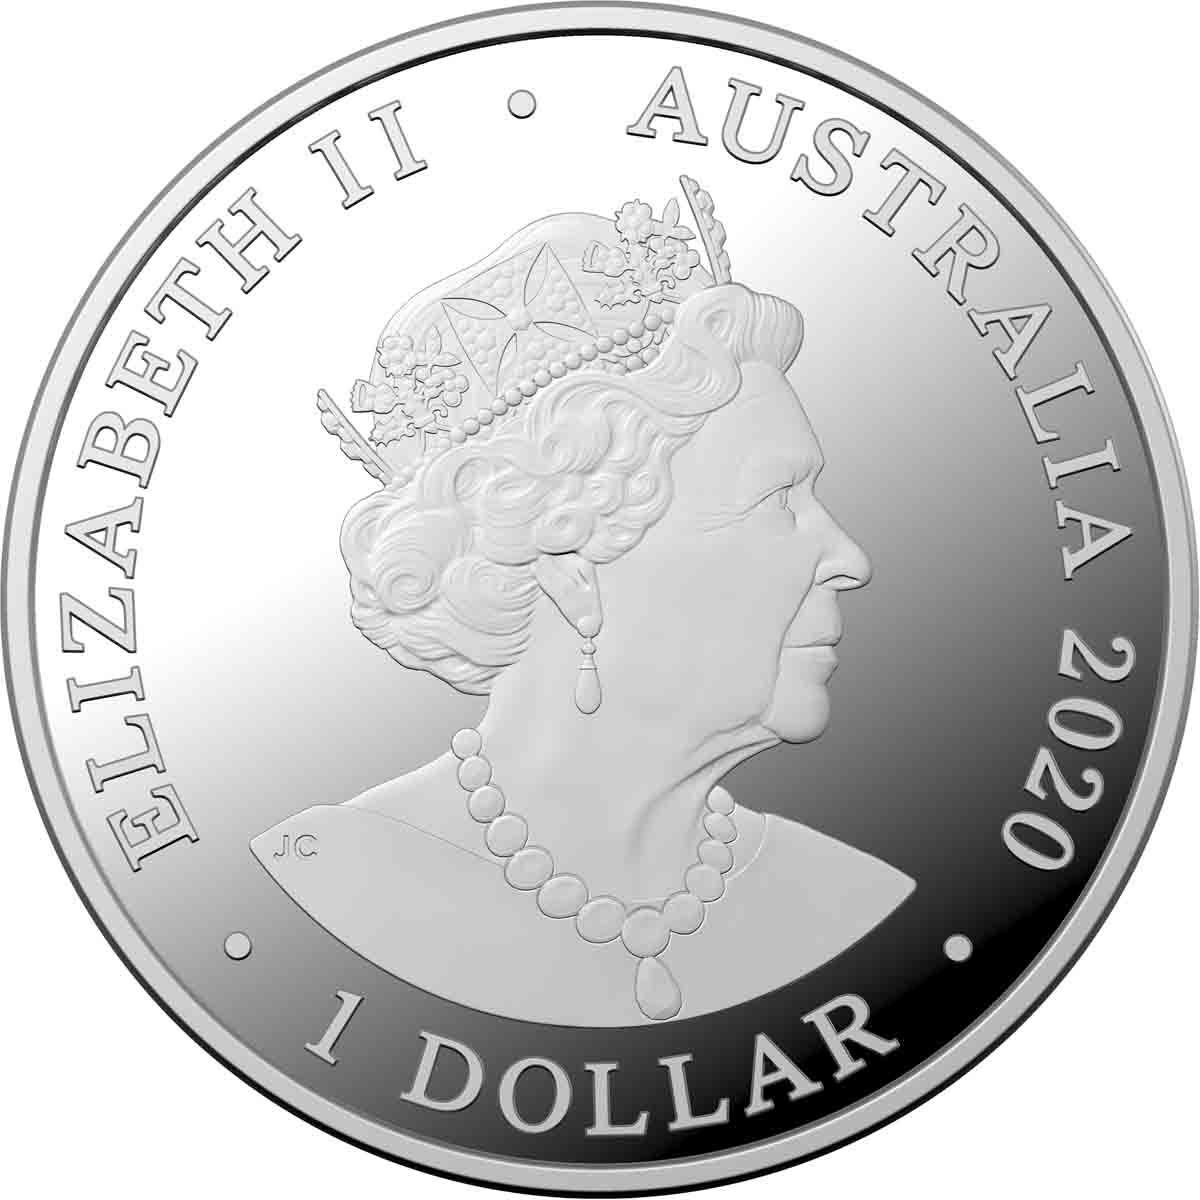 2020 $1 Redback Spider 1oz Silver Bullion Coin